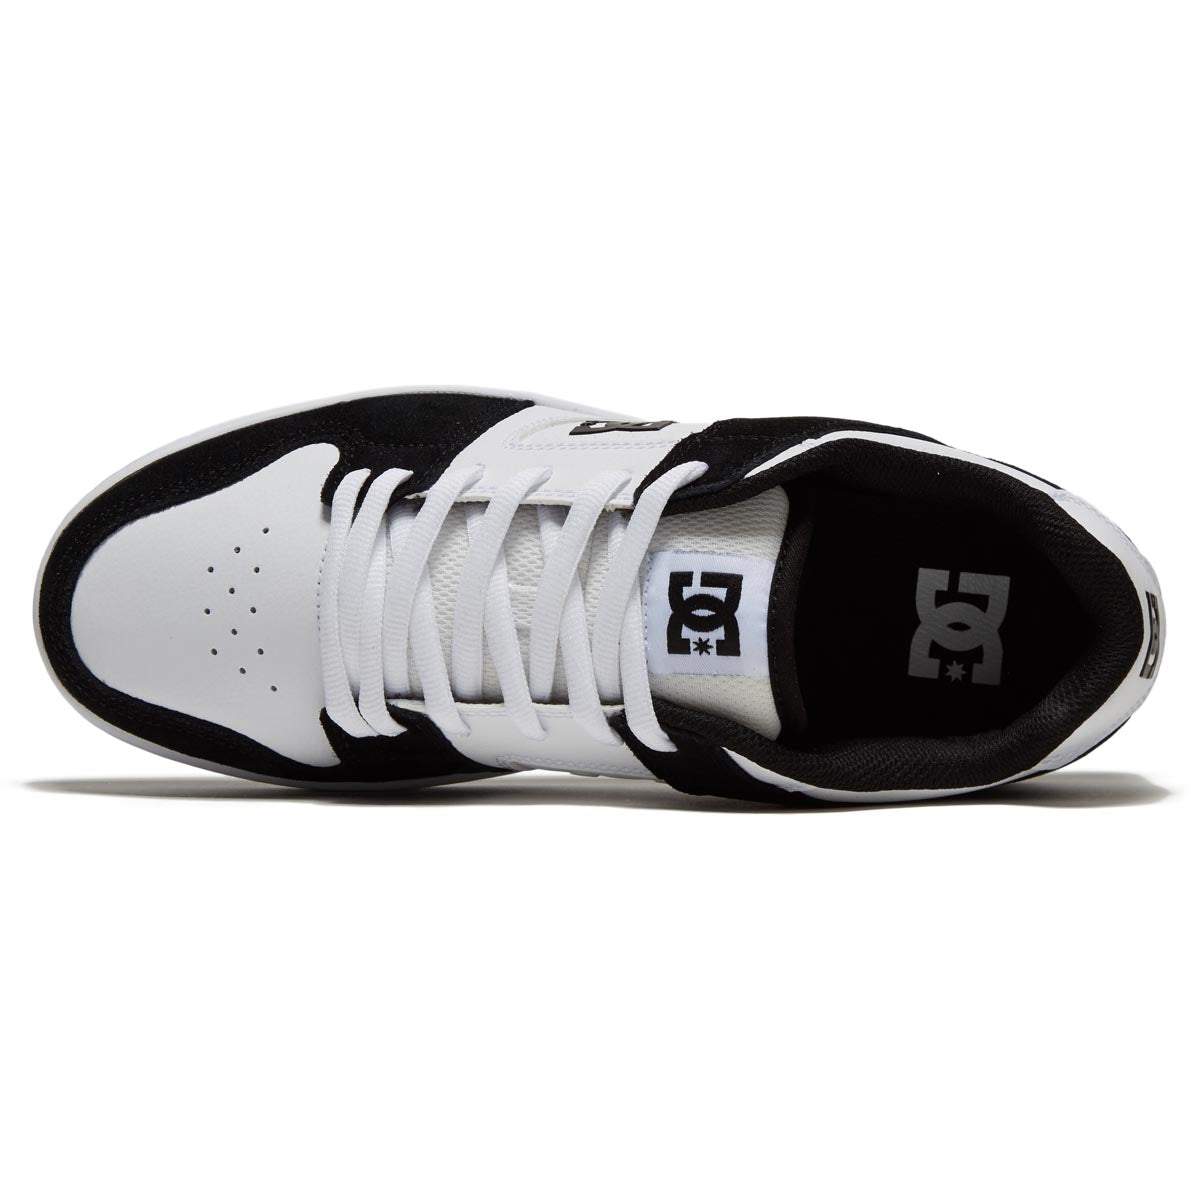 DC Manteca 4 Shoes - White/Black image 3